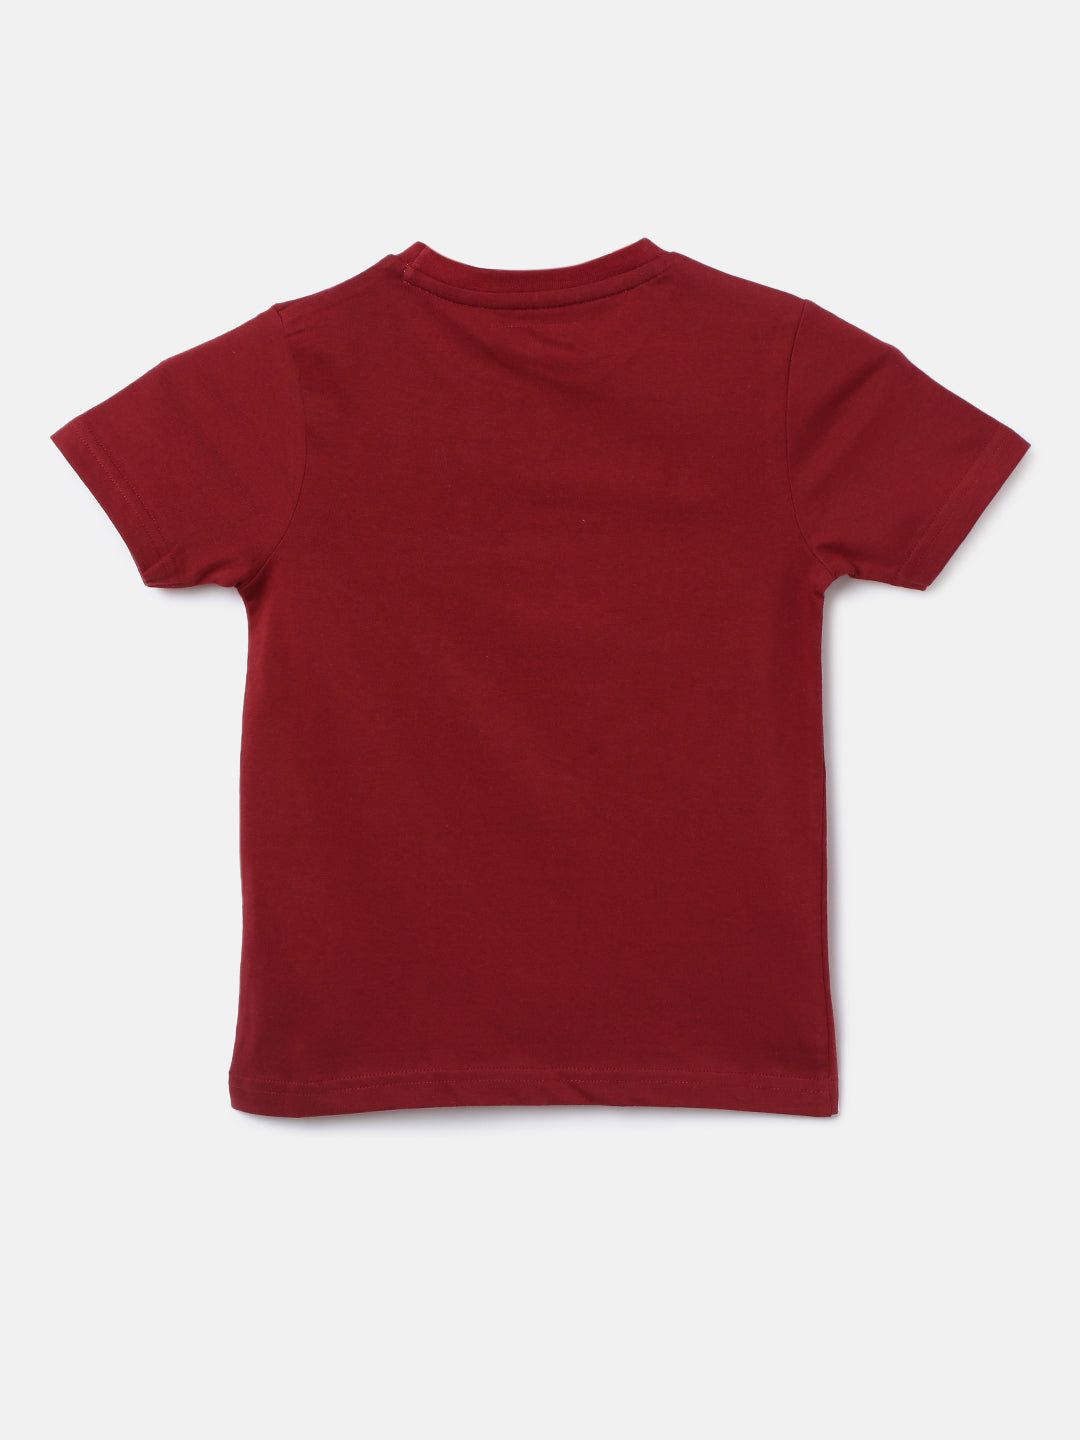 Boys Big Ben City Printed Round Neck Red T-Shirt